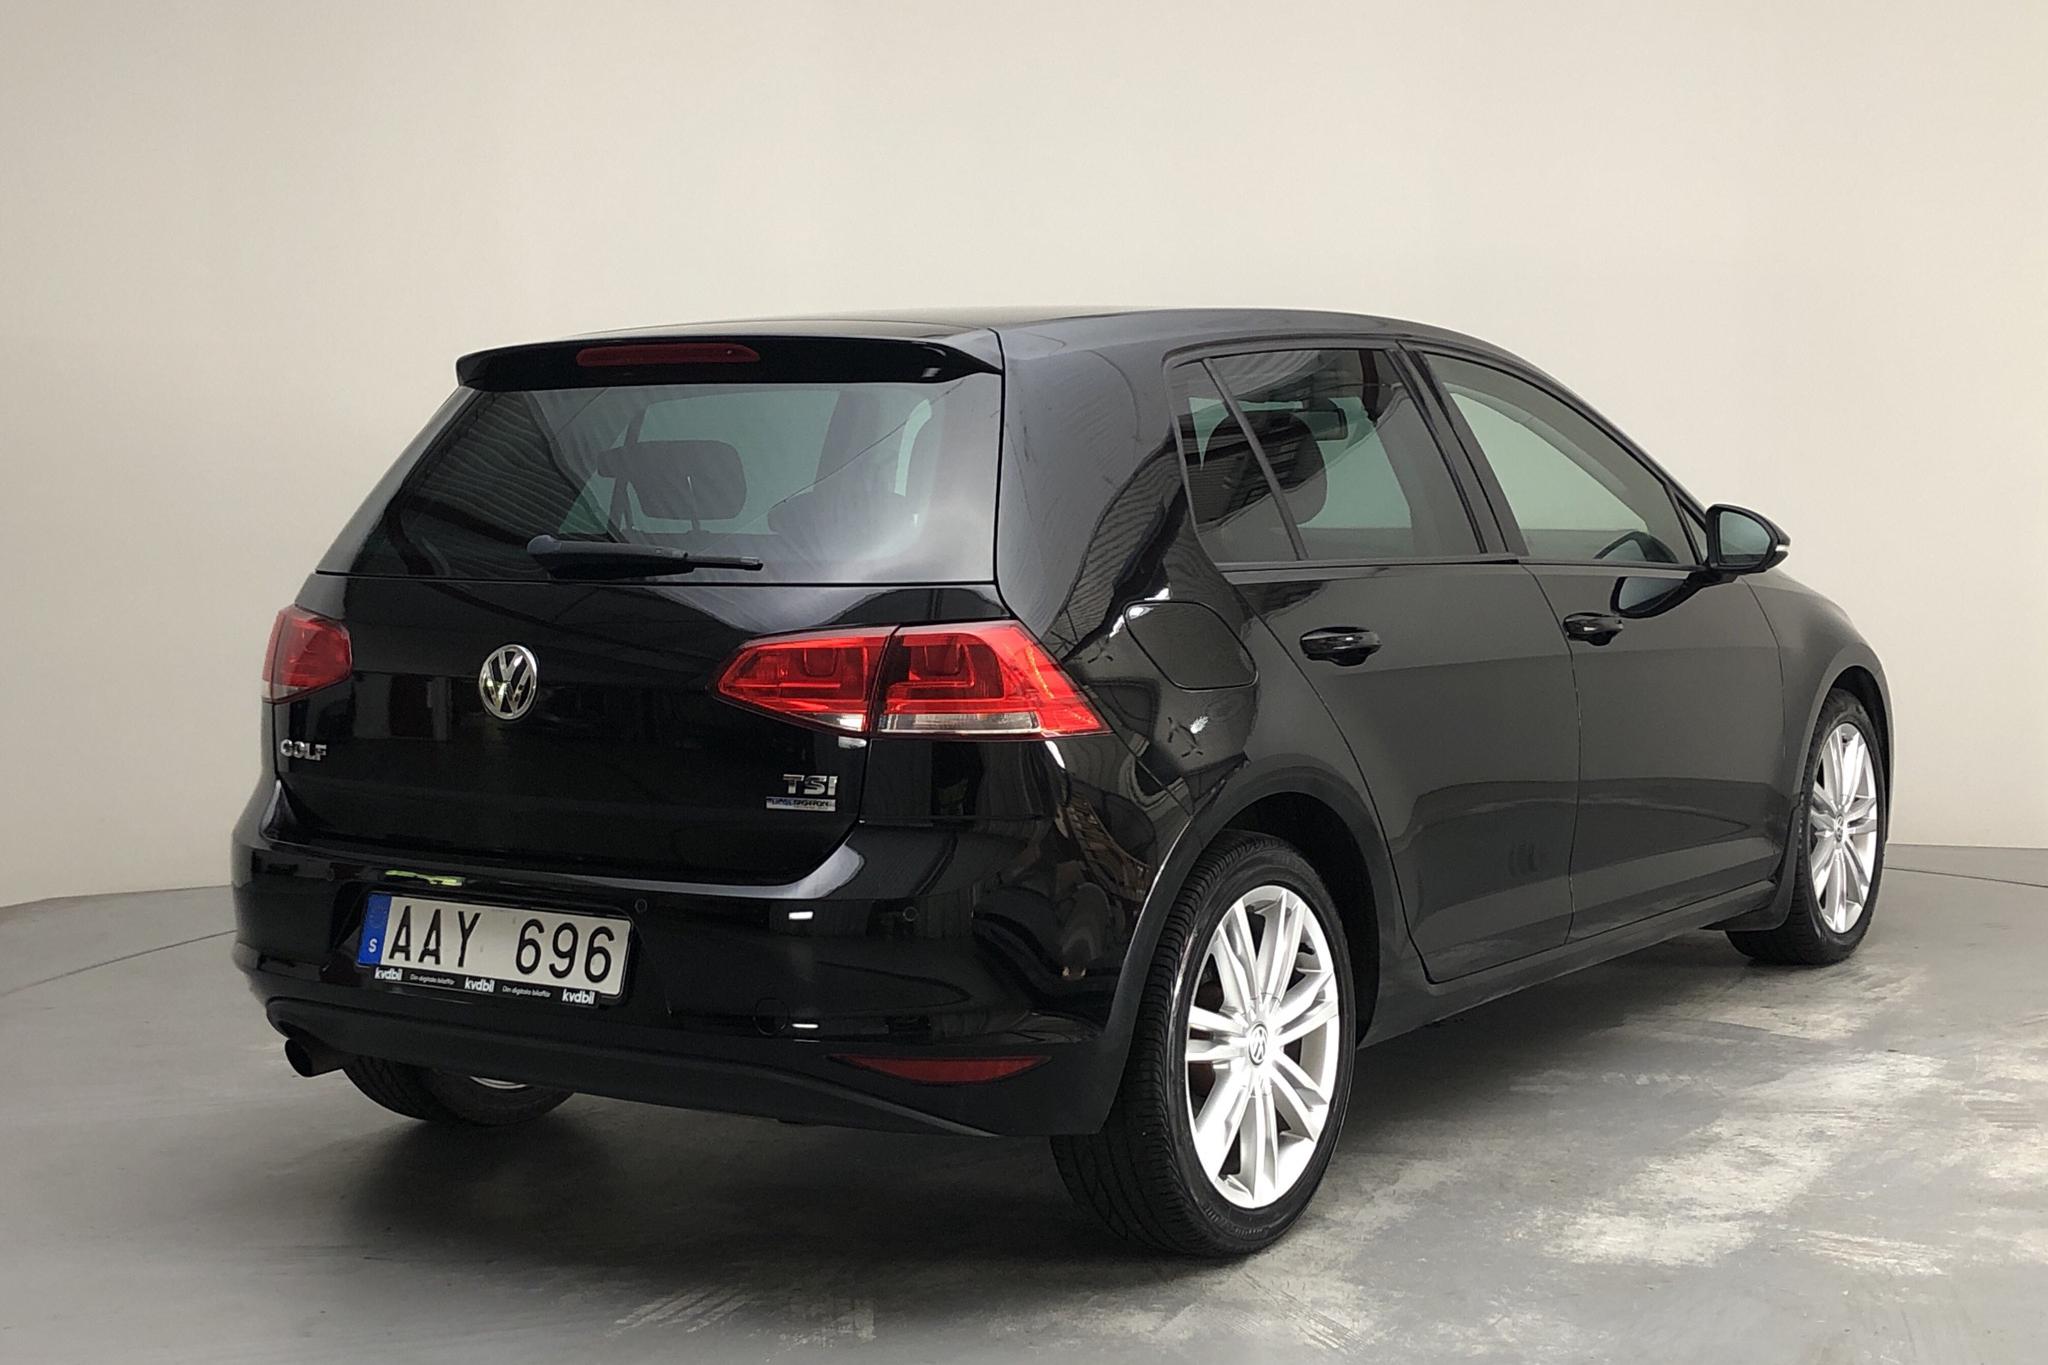 VW Golf VII 1.2 TSI 5dr (105hk) - 9 861 mil - Manuell - svart - 2013